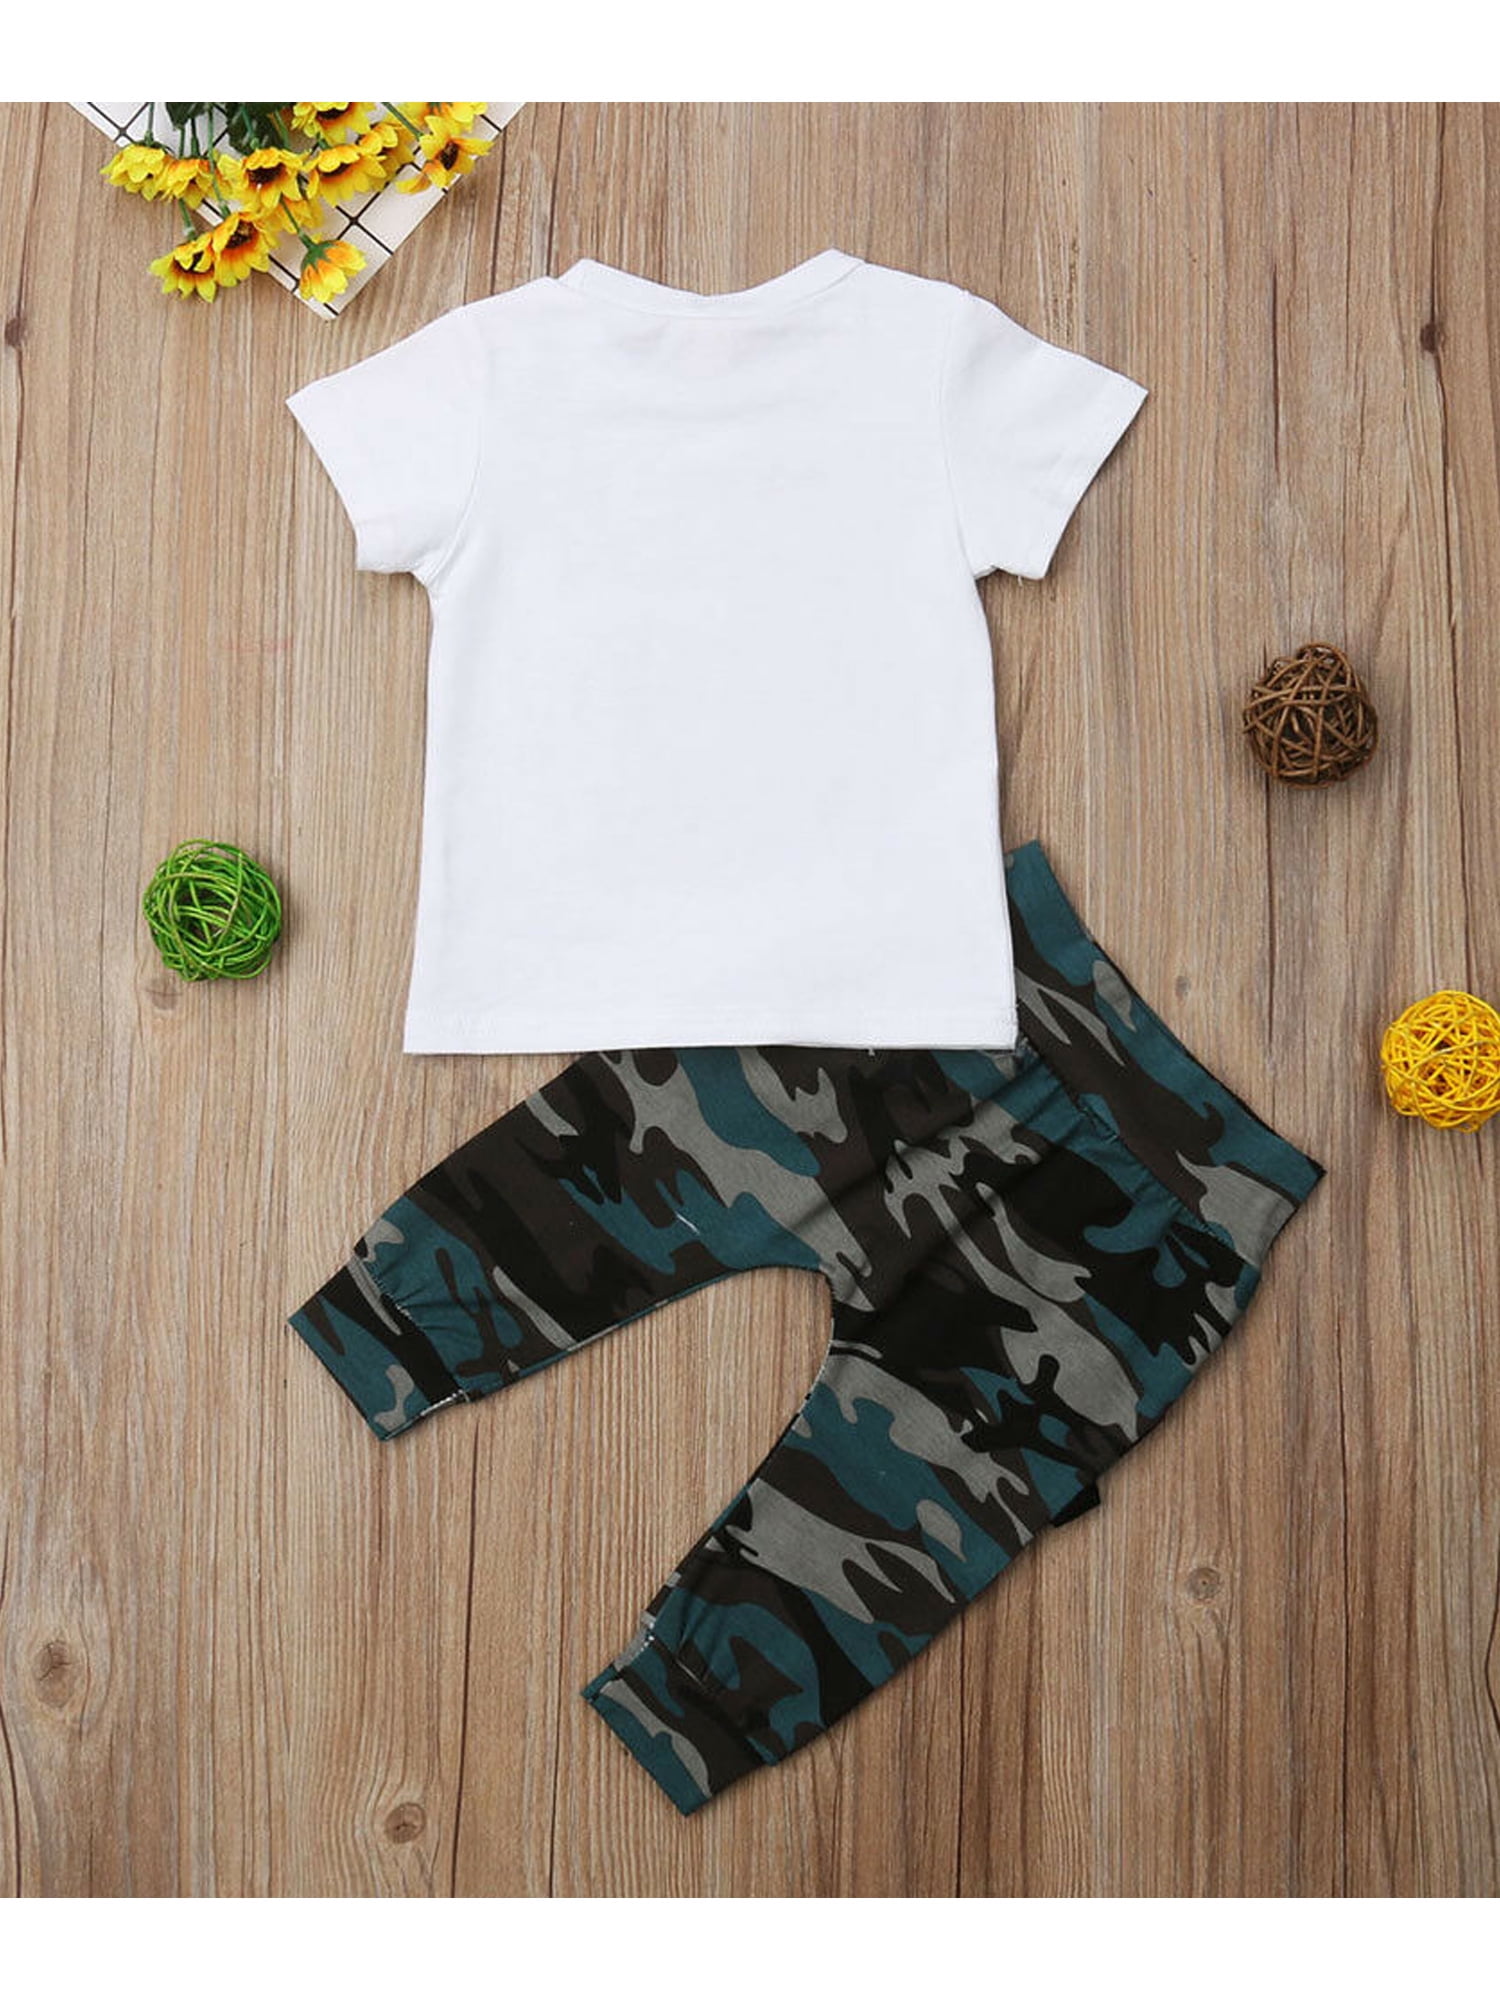 USA Street Toddler Baby Boys Hip Hop Tops T-shirt Camo Pants Outfits Set Clothes 